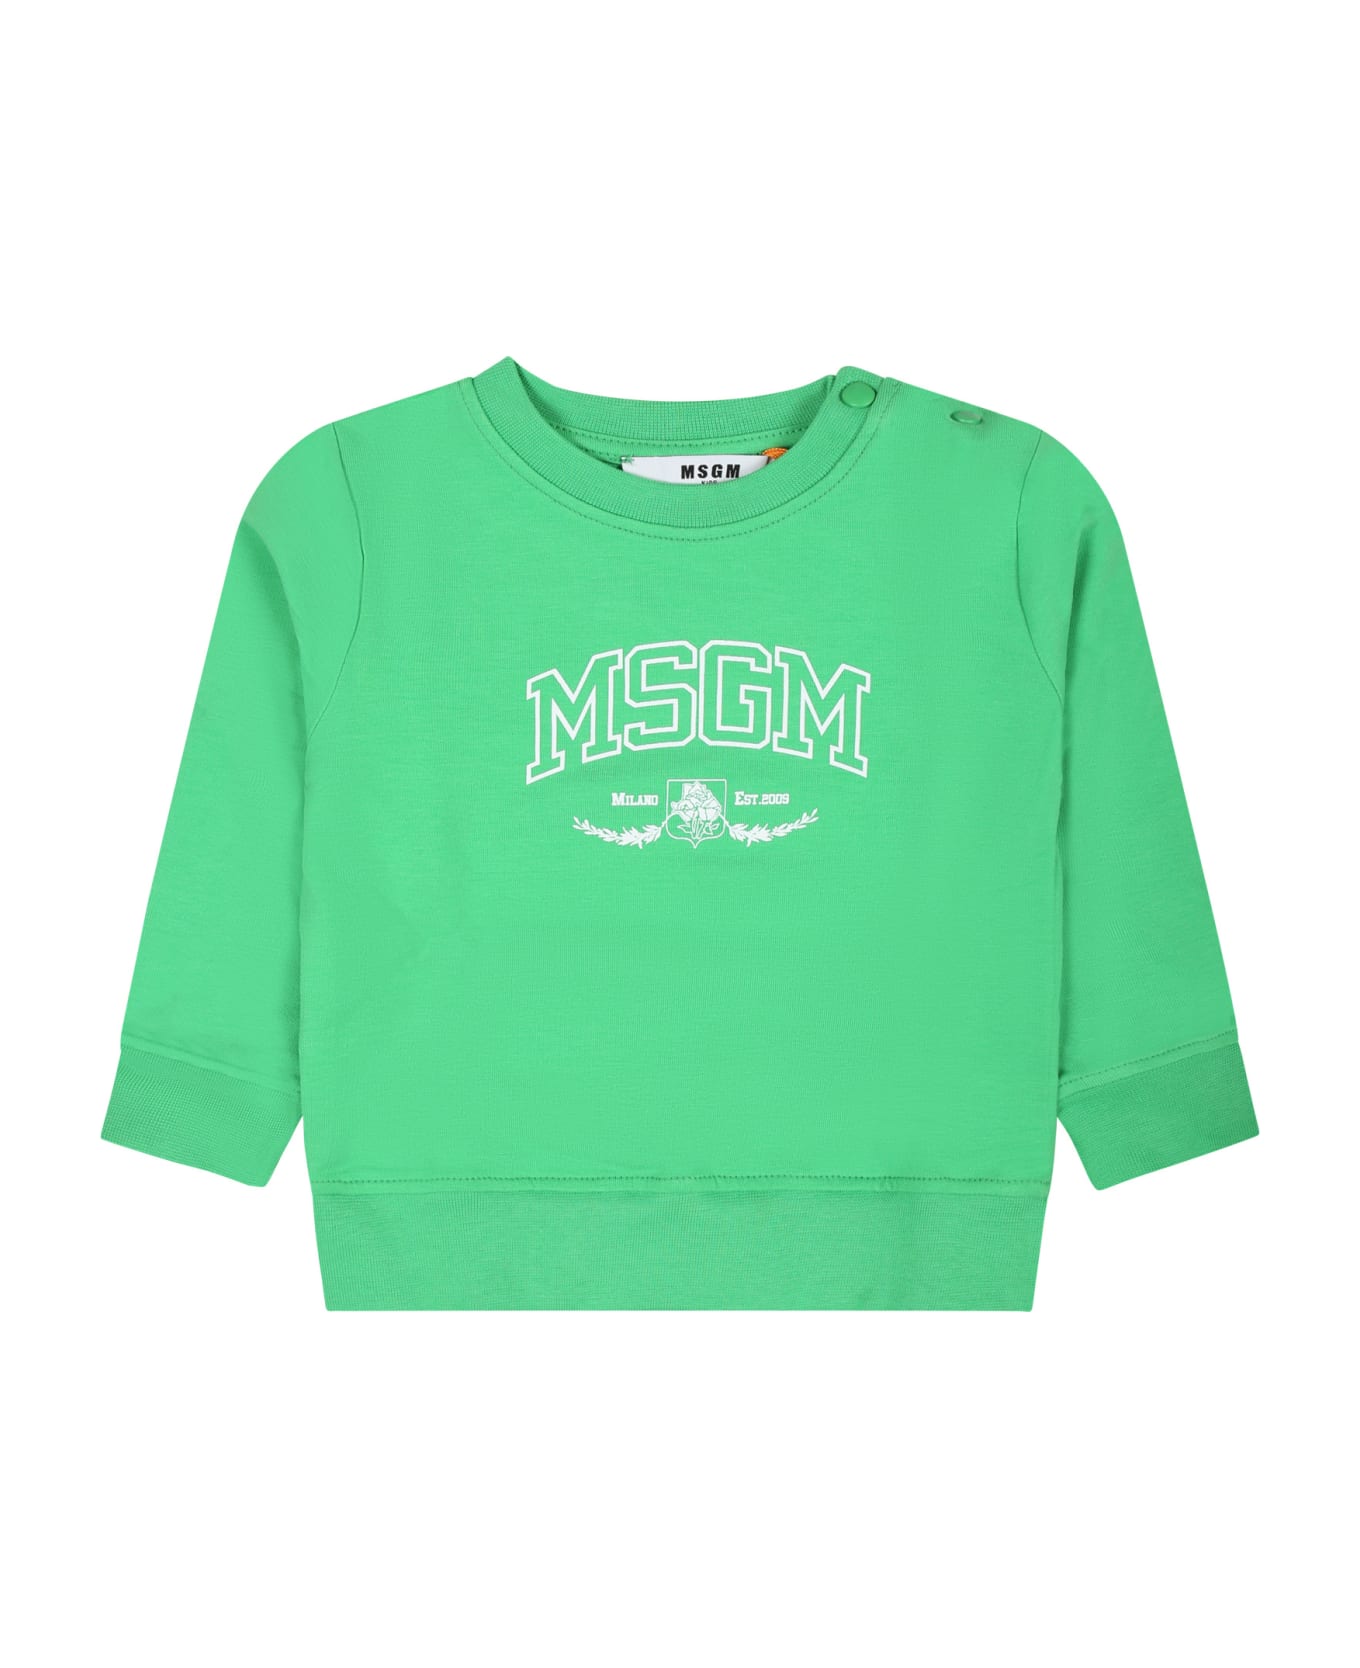 MSGM Green Sweatshirt For Baby Boy With Logo - Green